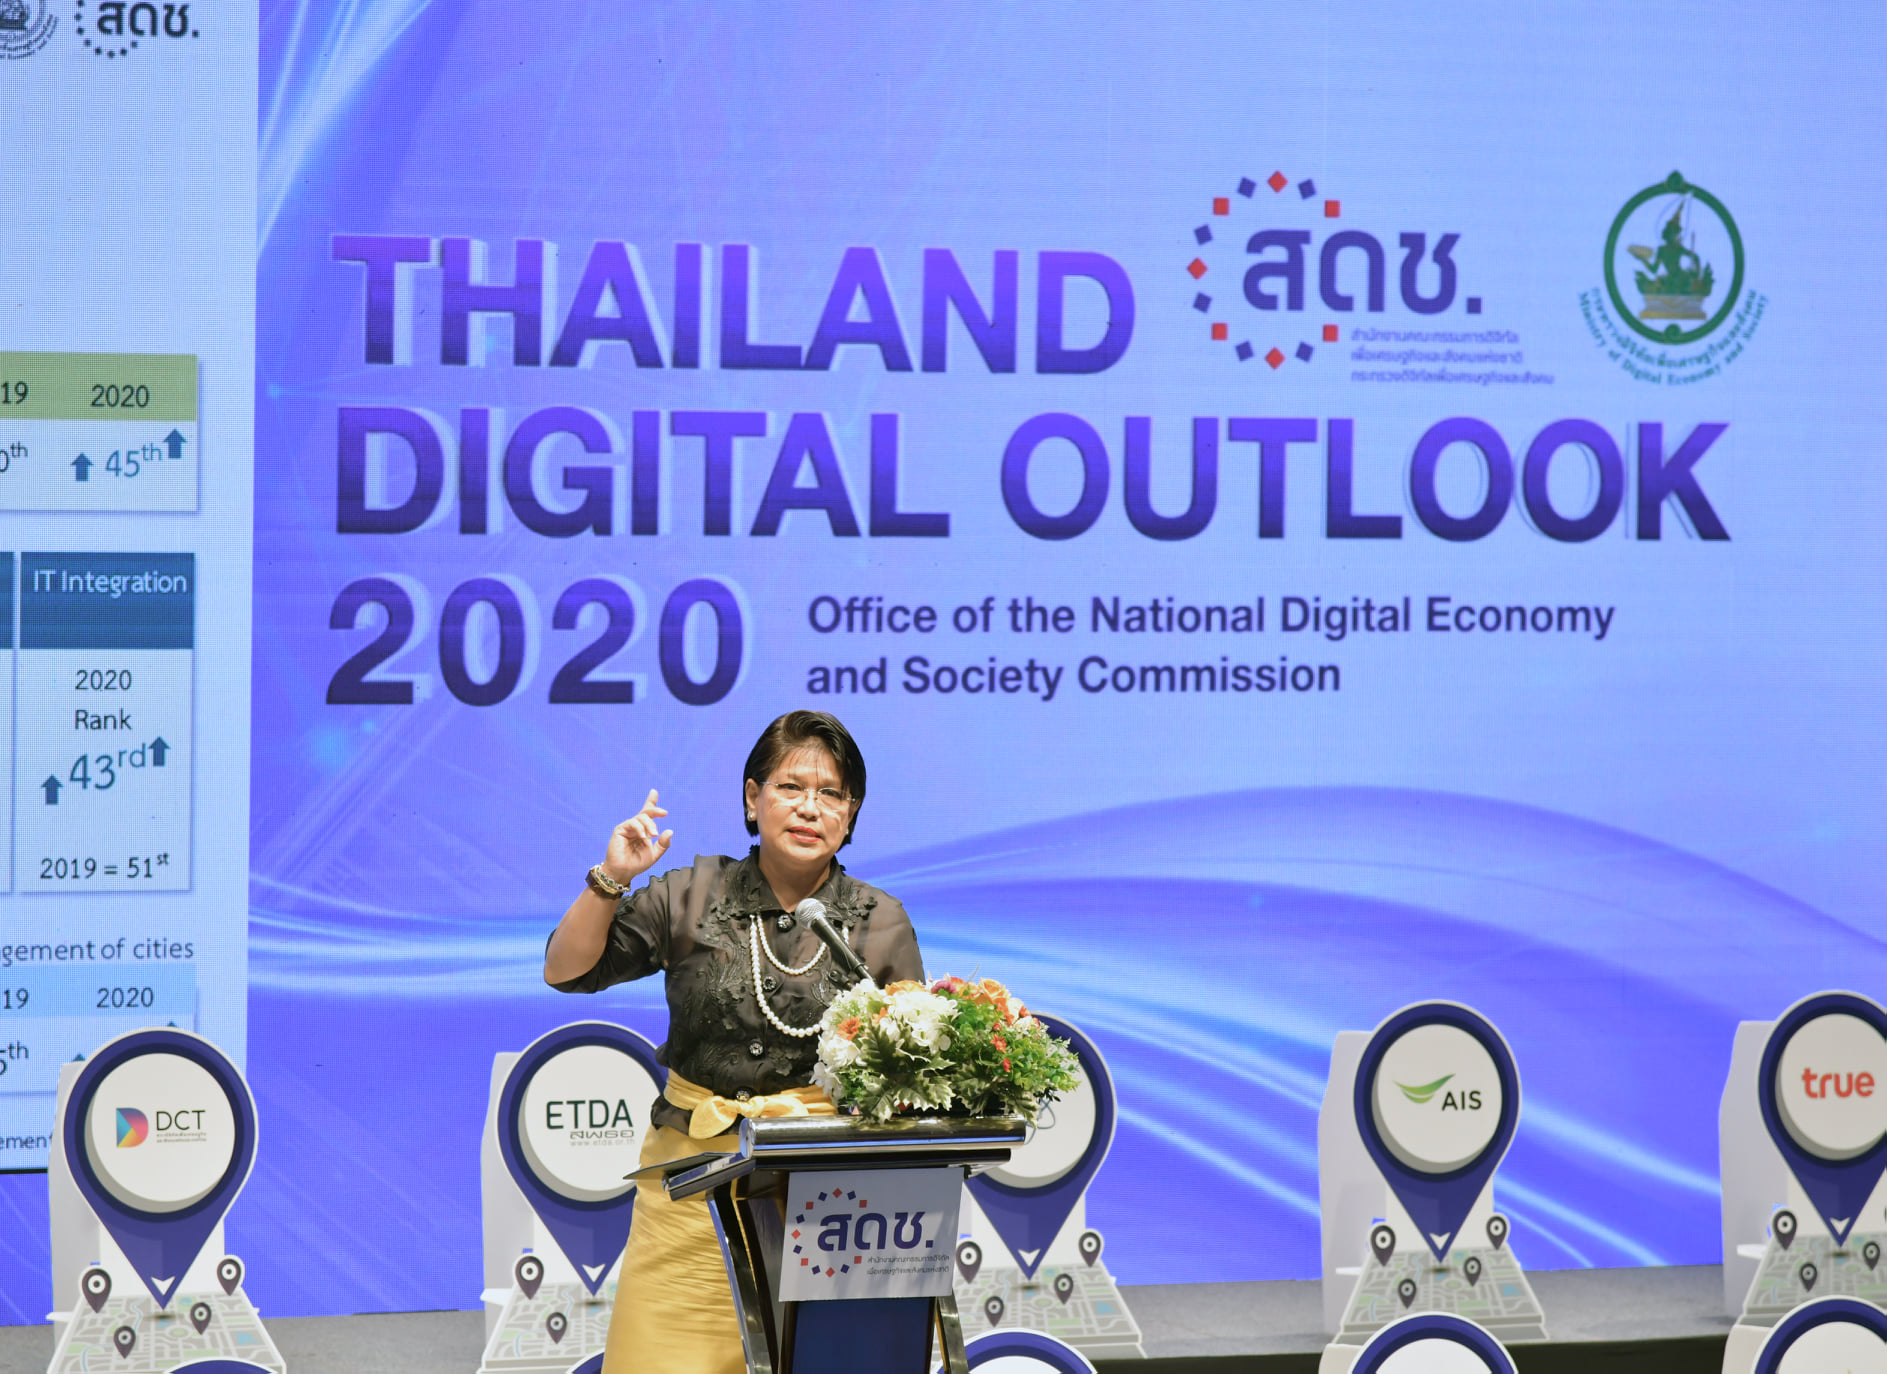    Thailand Digital Outlook 2020 ​